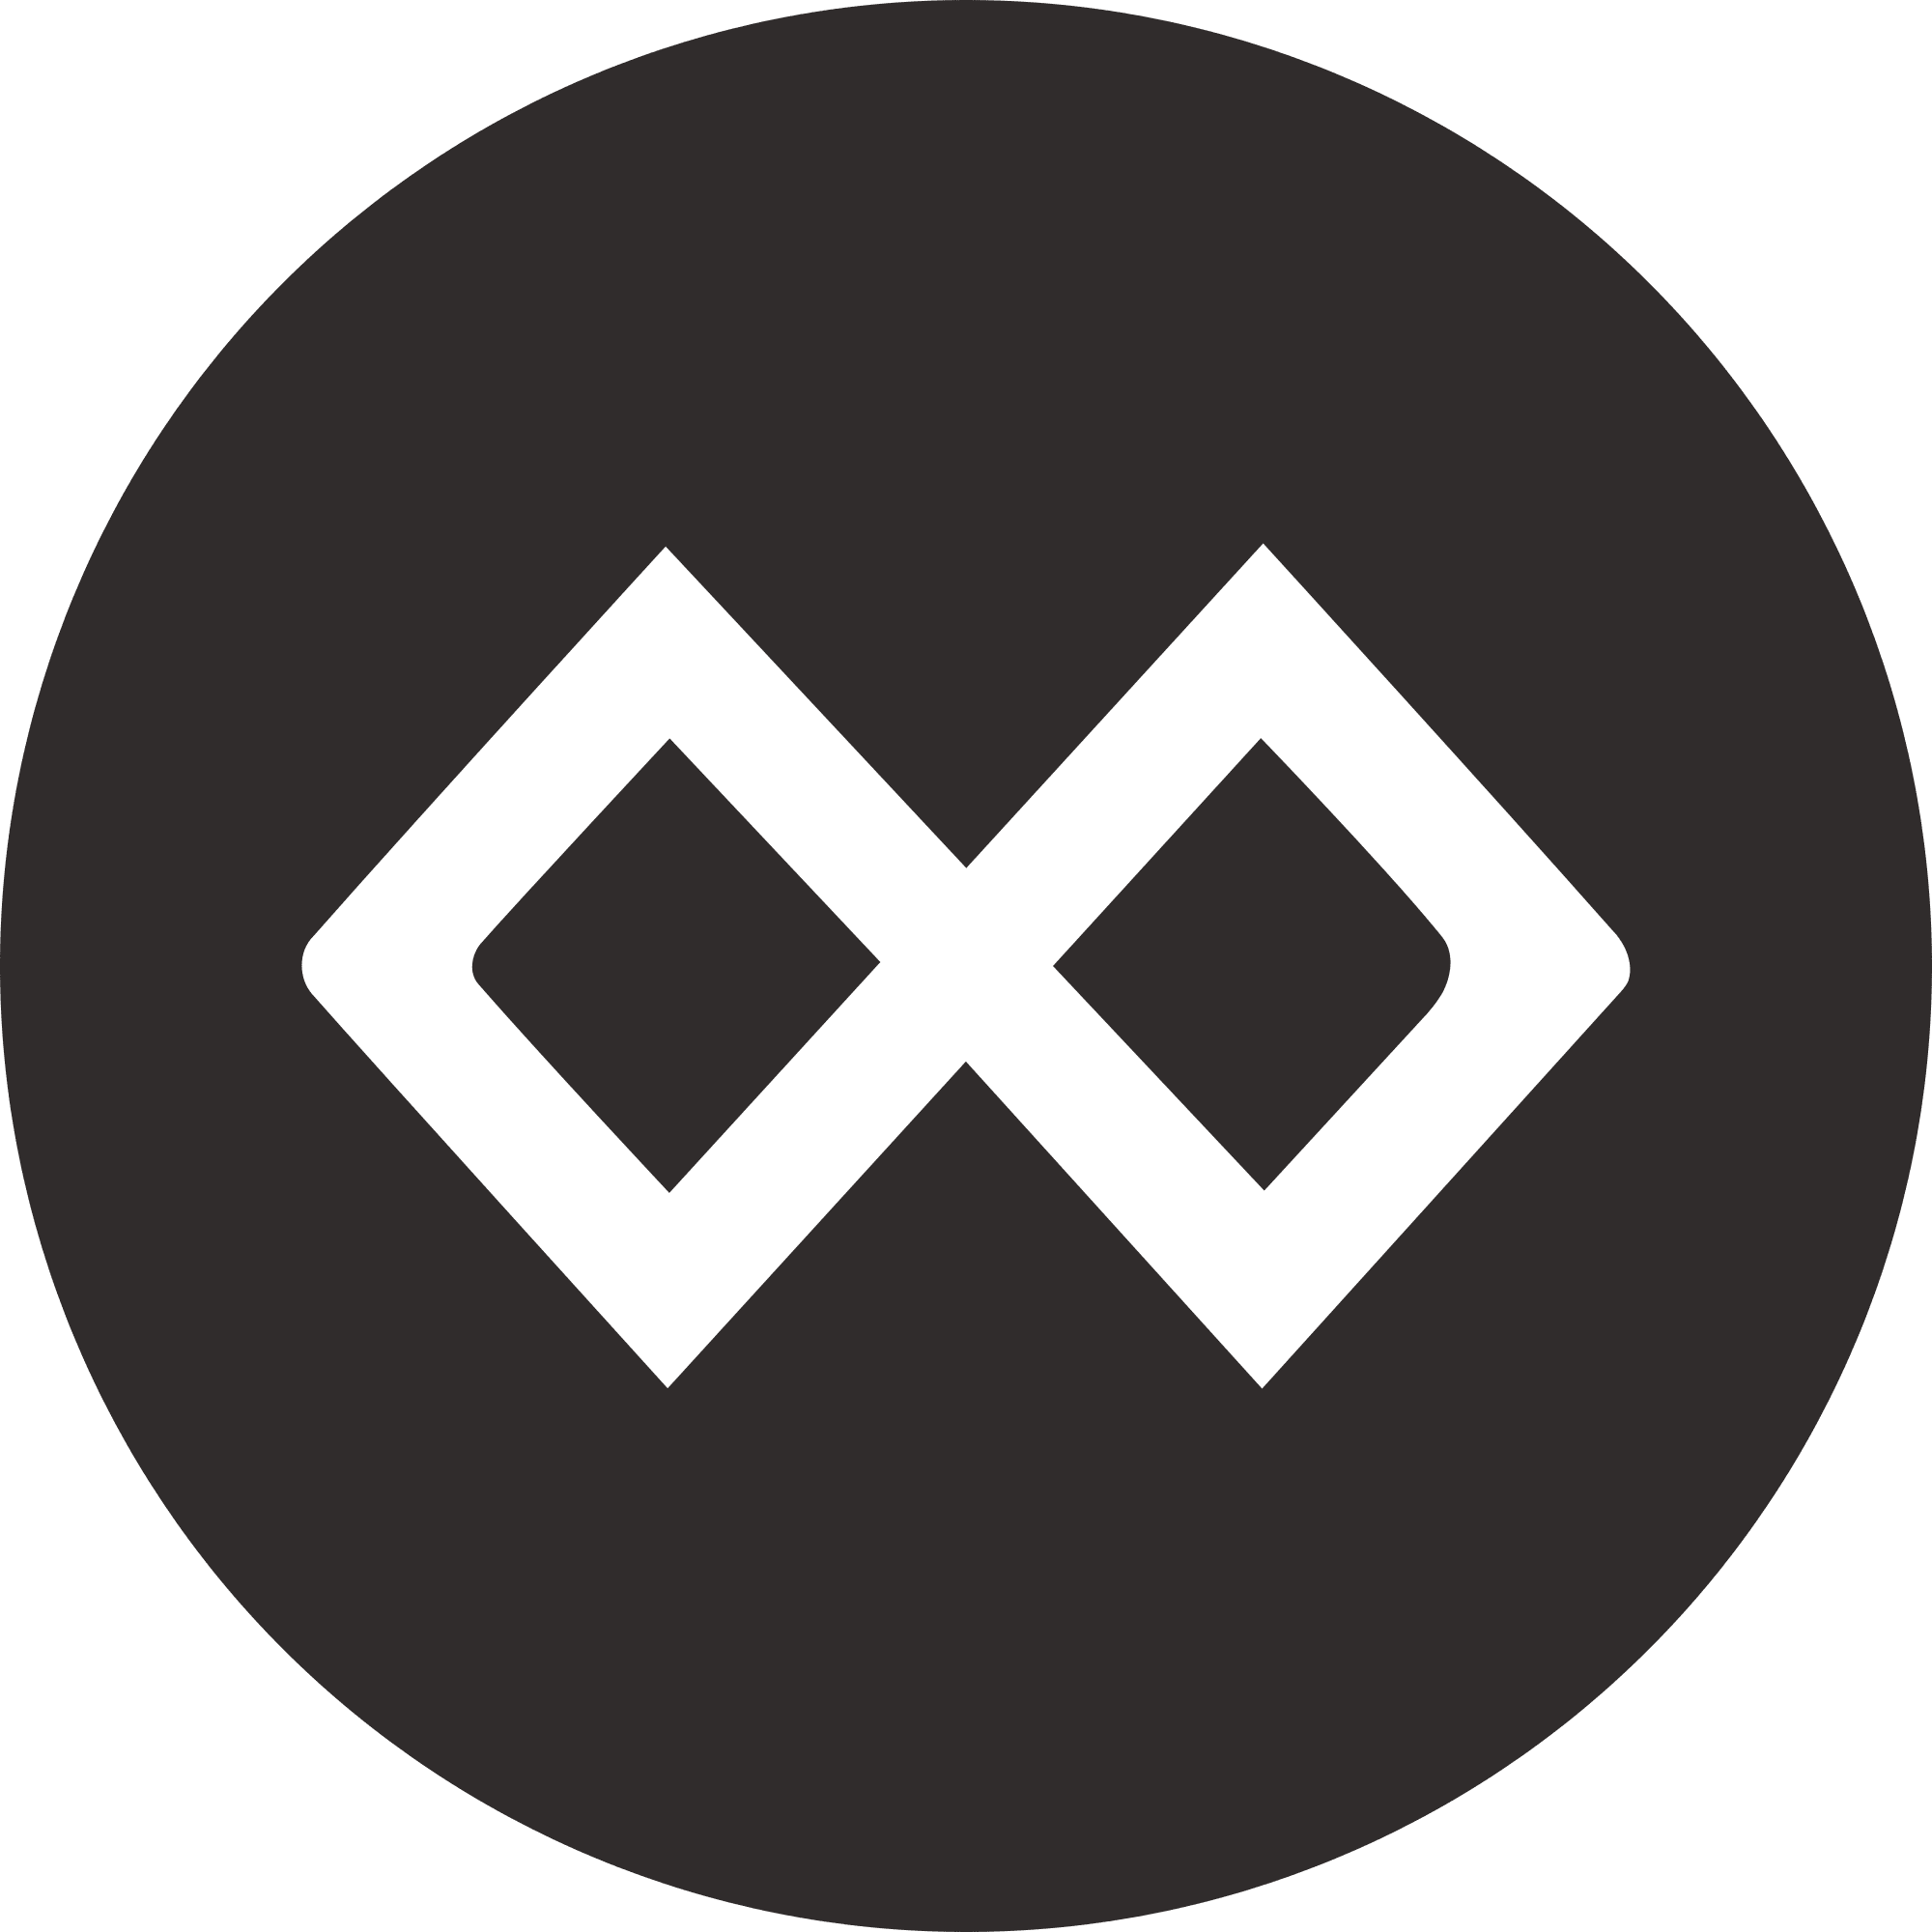 TenX logo in png format